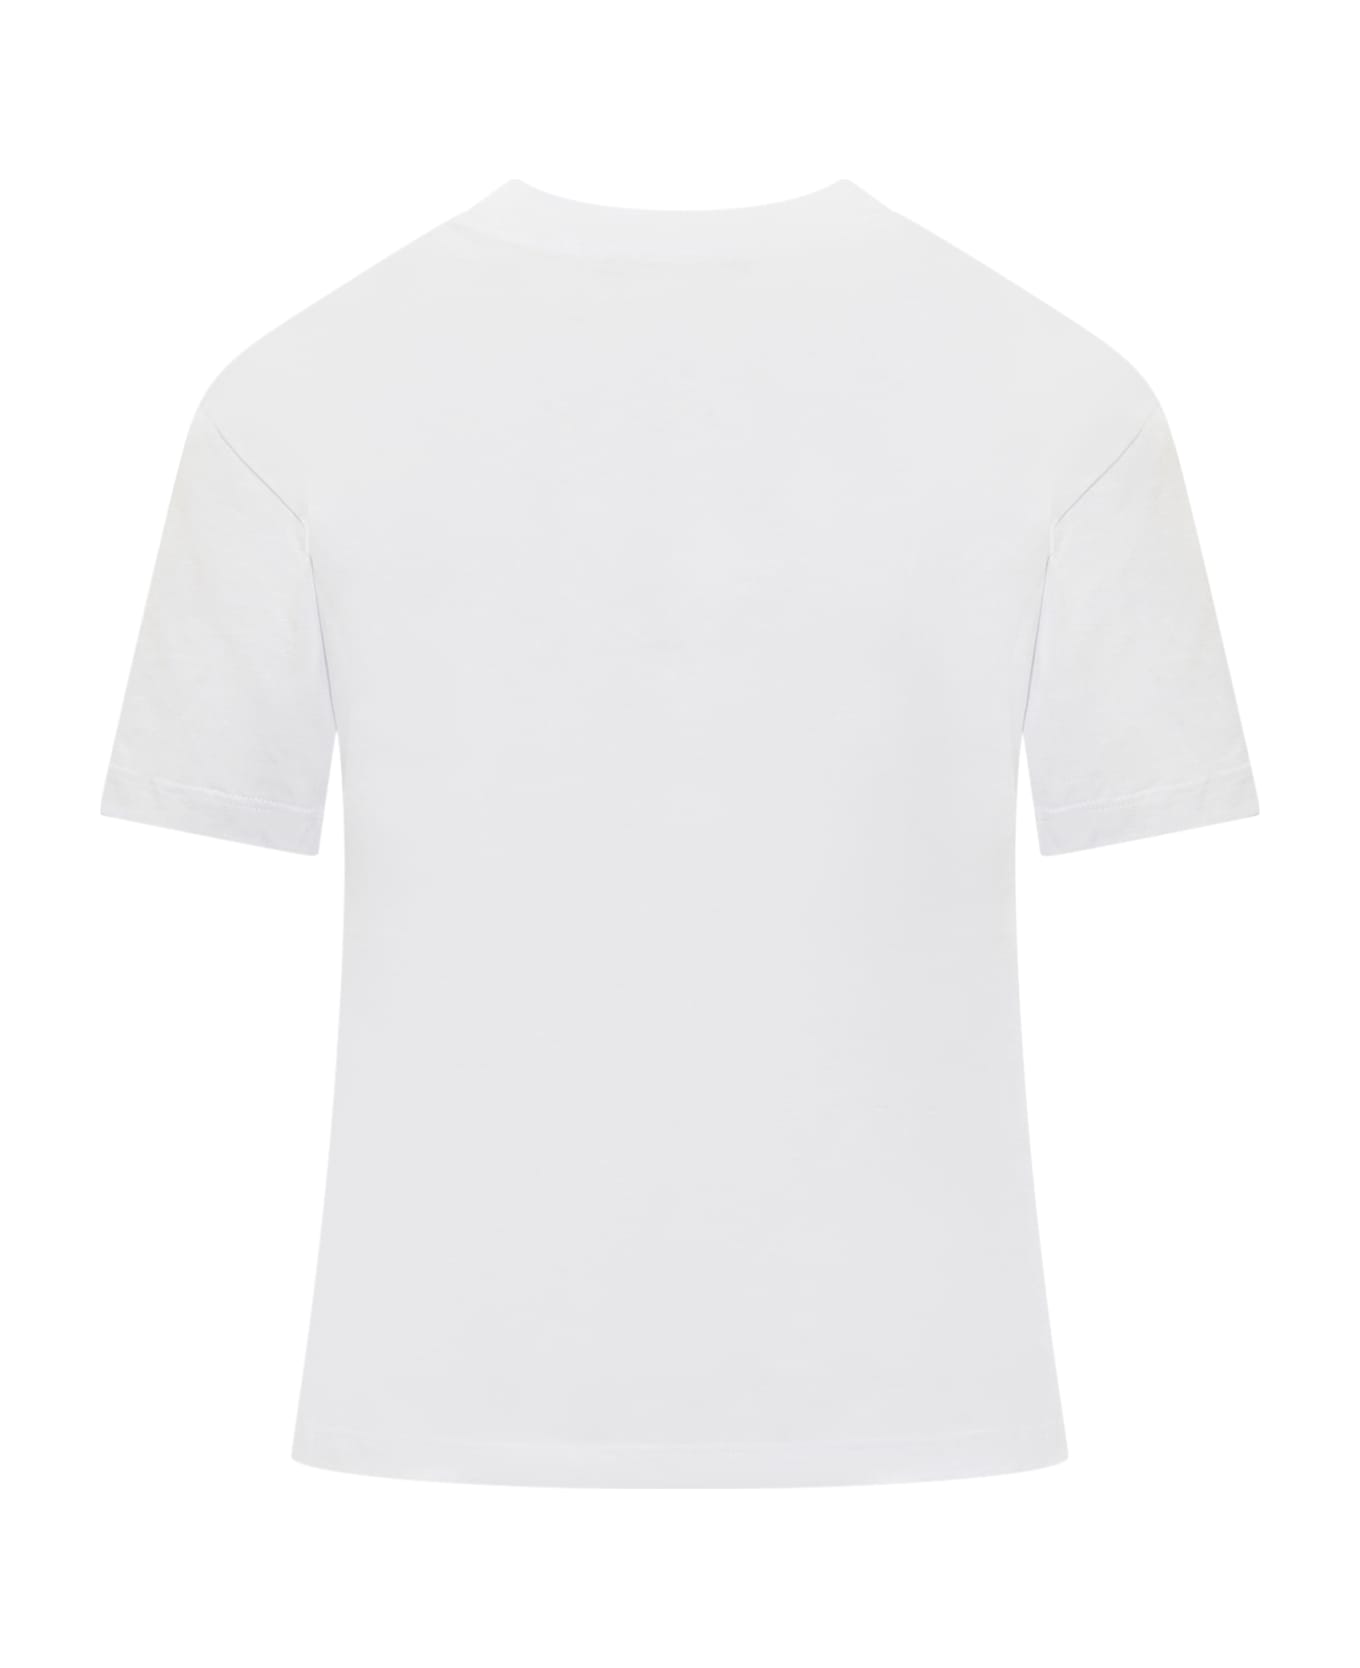 MSGM Massimo Giorgetti T-shirt - OPTICAL WHITE